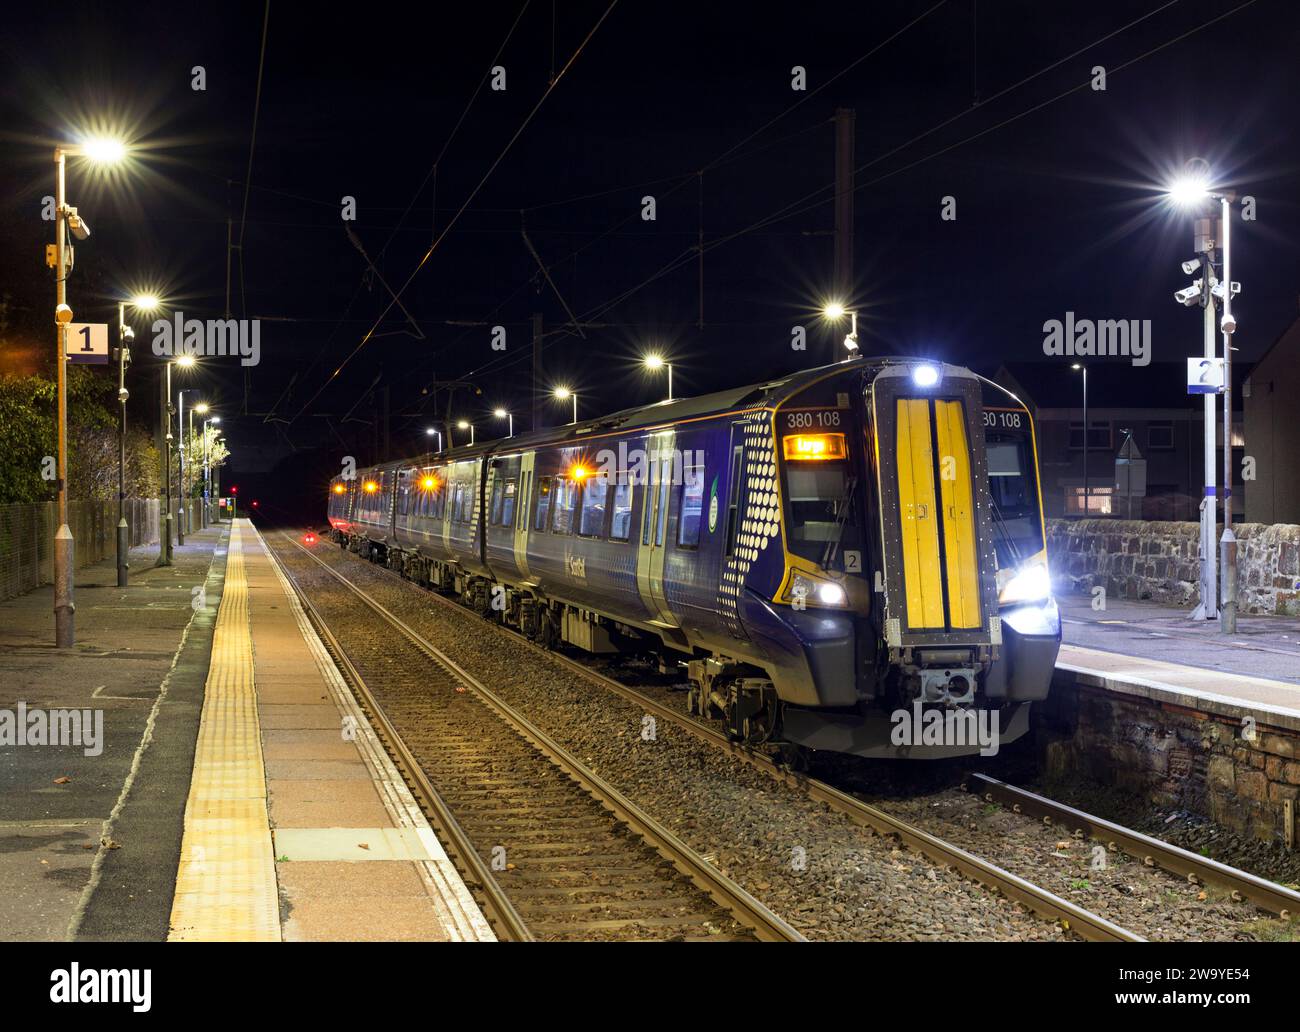 Scotrail Siemens class 380 electric train 380108 calling at Stevenston (Ayrshire) railway station, Scotland, UK at night. Stock Photo